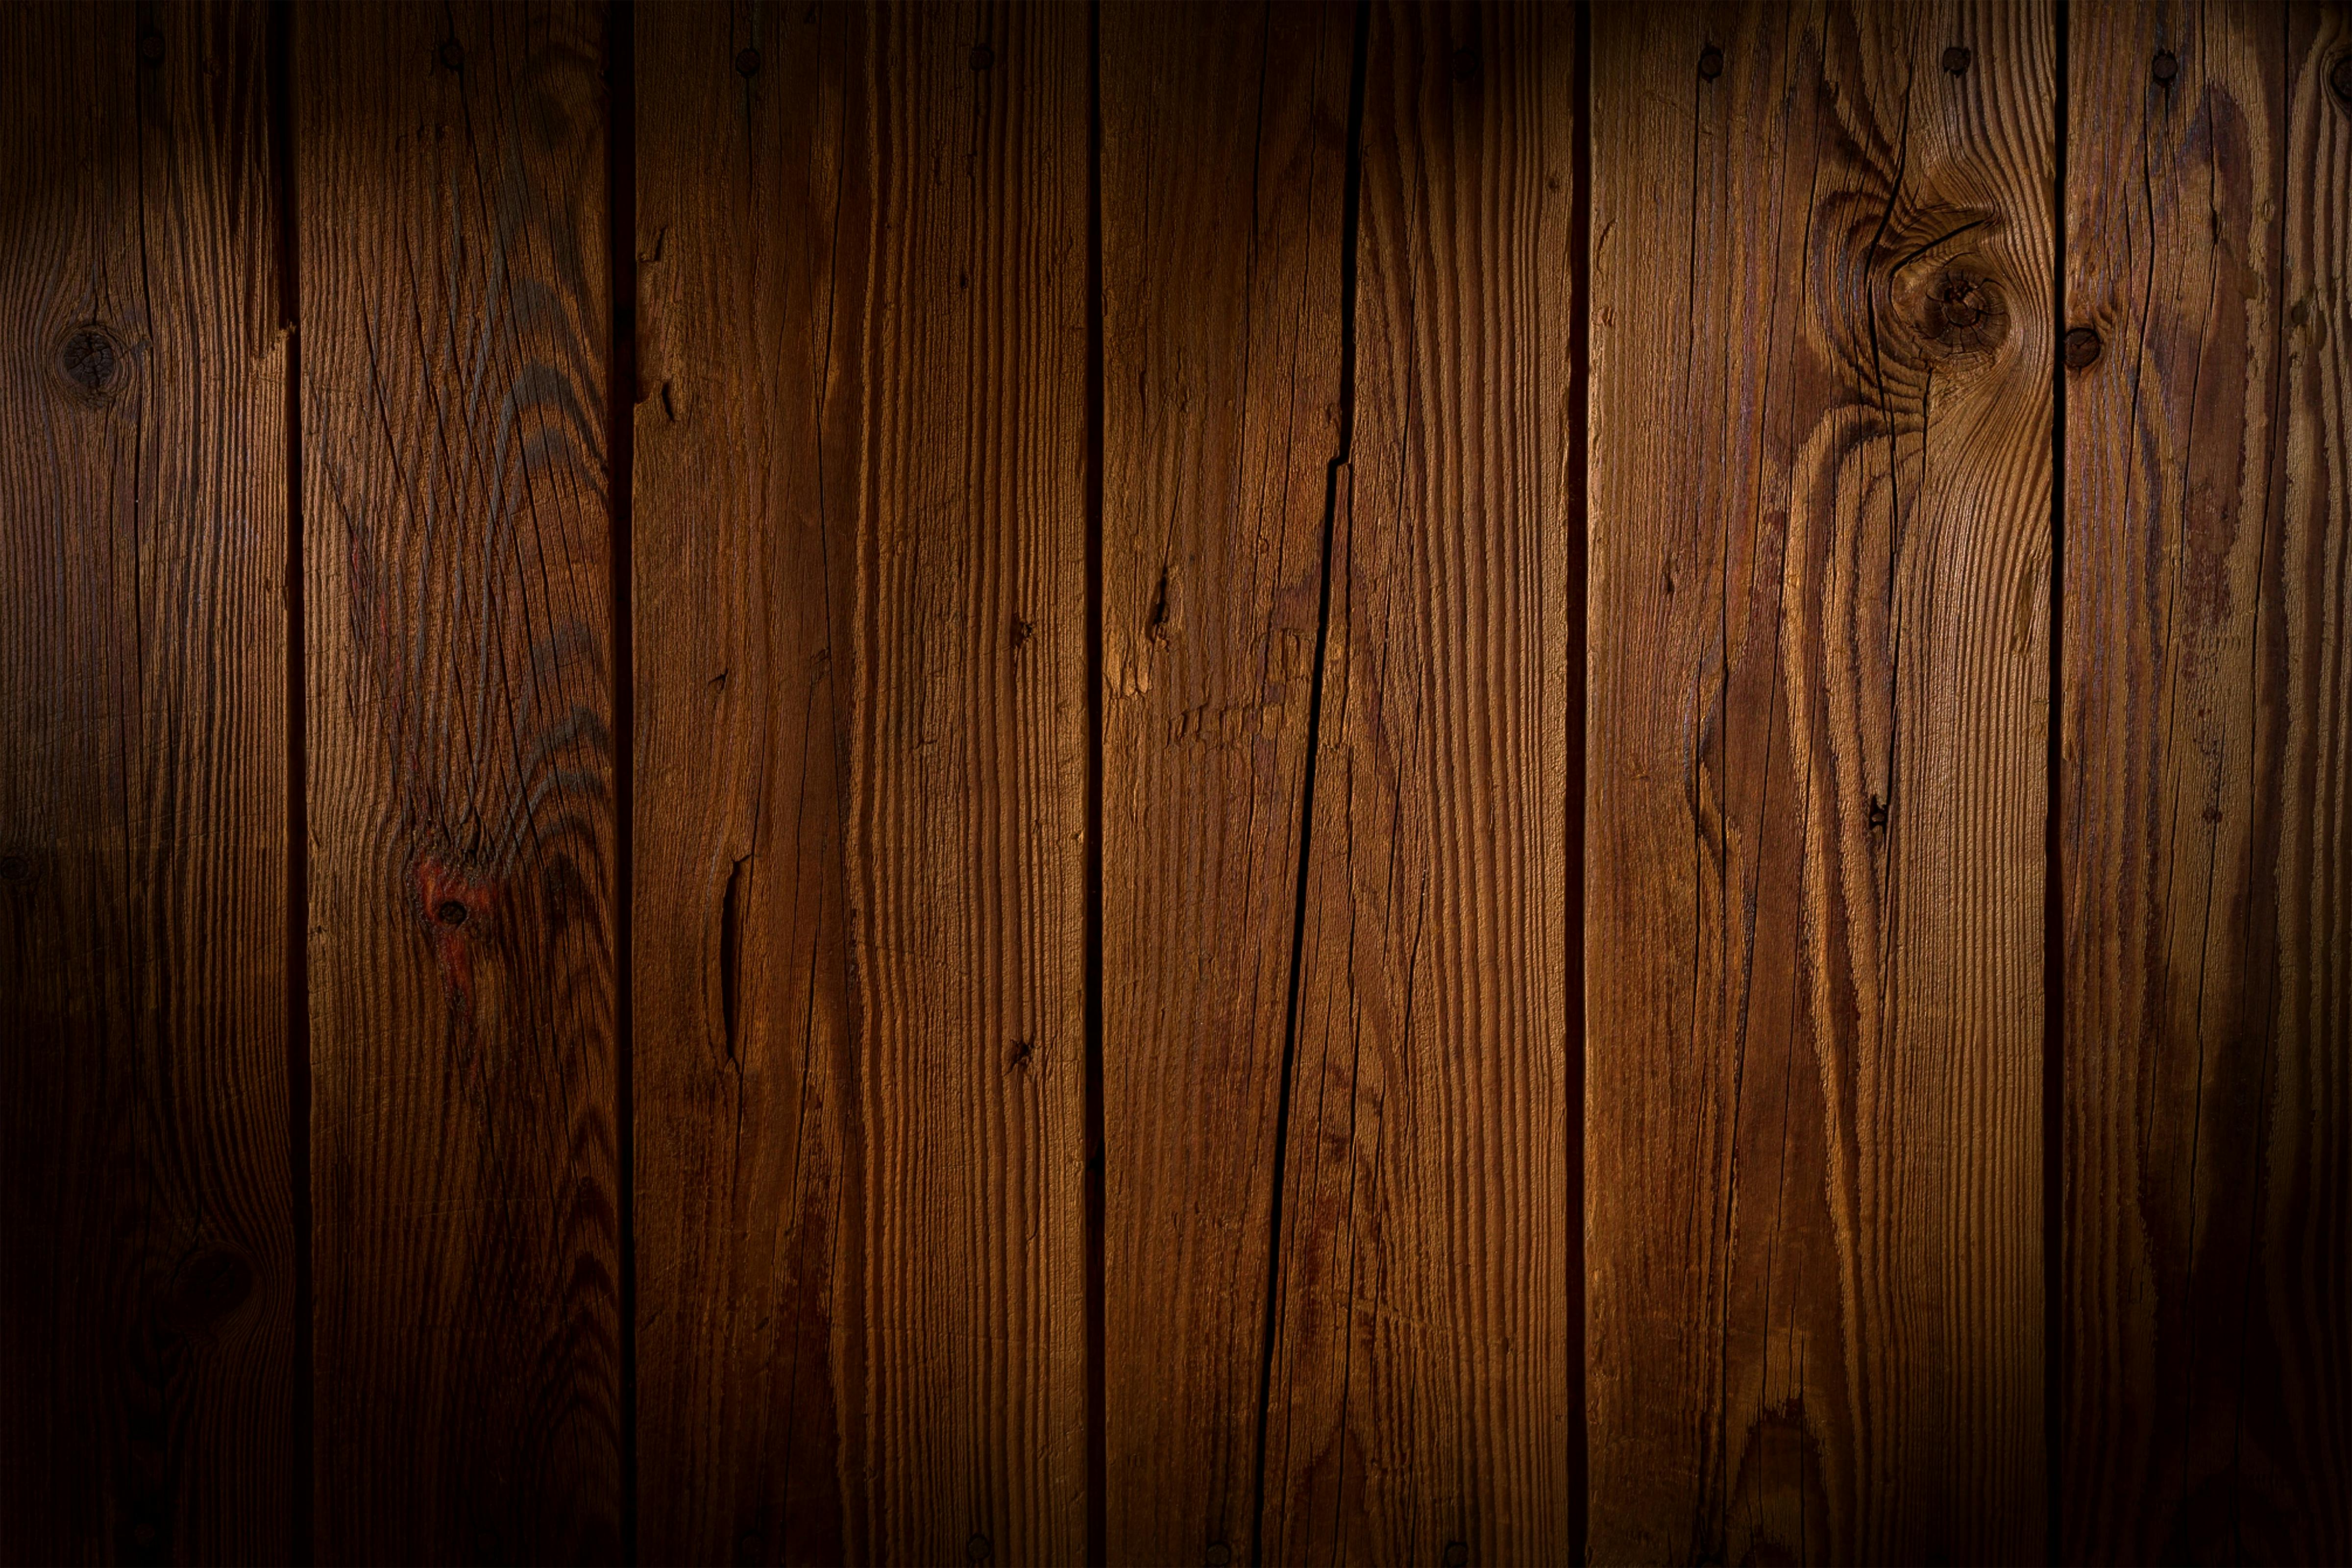 Macro Shot of Wooden Planks · Free Stock Photo